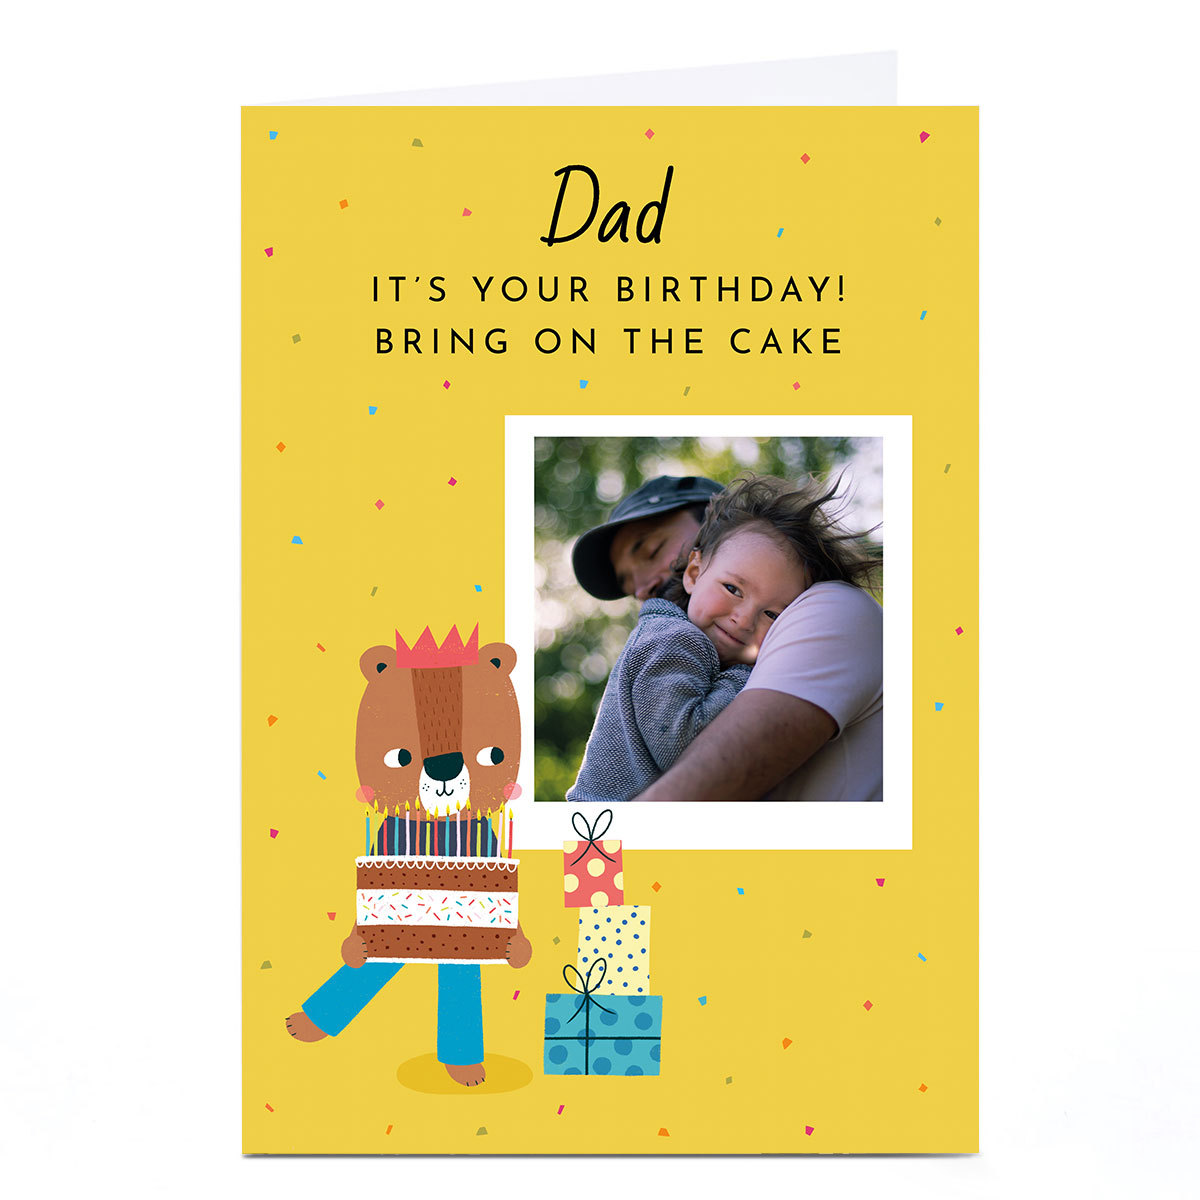 Personalised Lemon & Sugar Photo Card - It's Your Birthday!